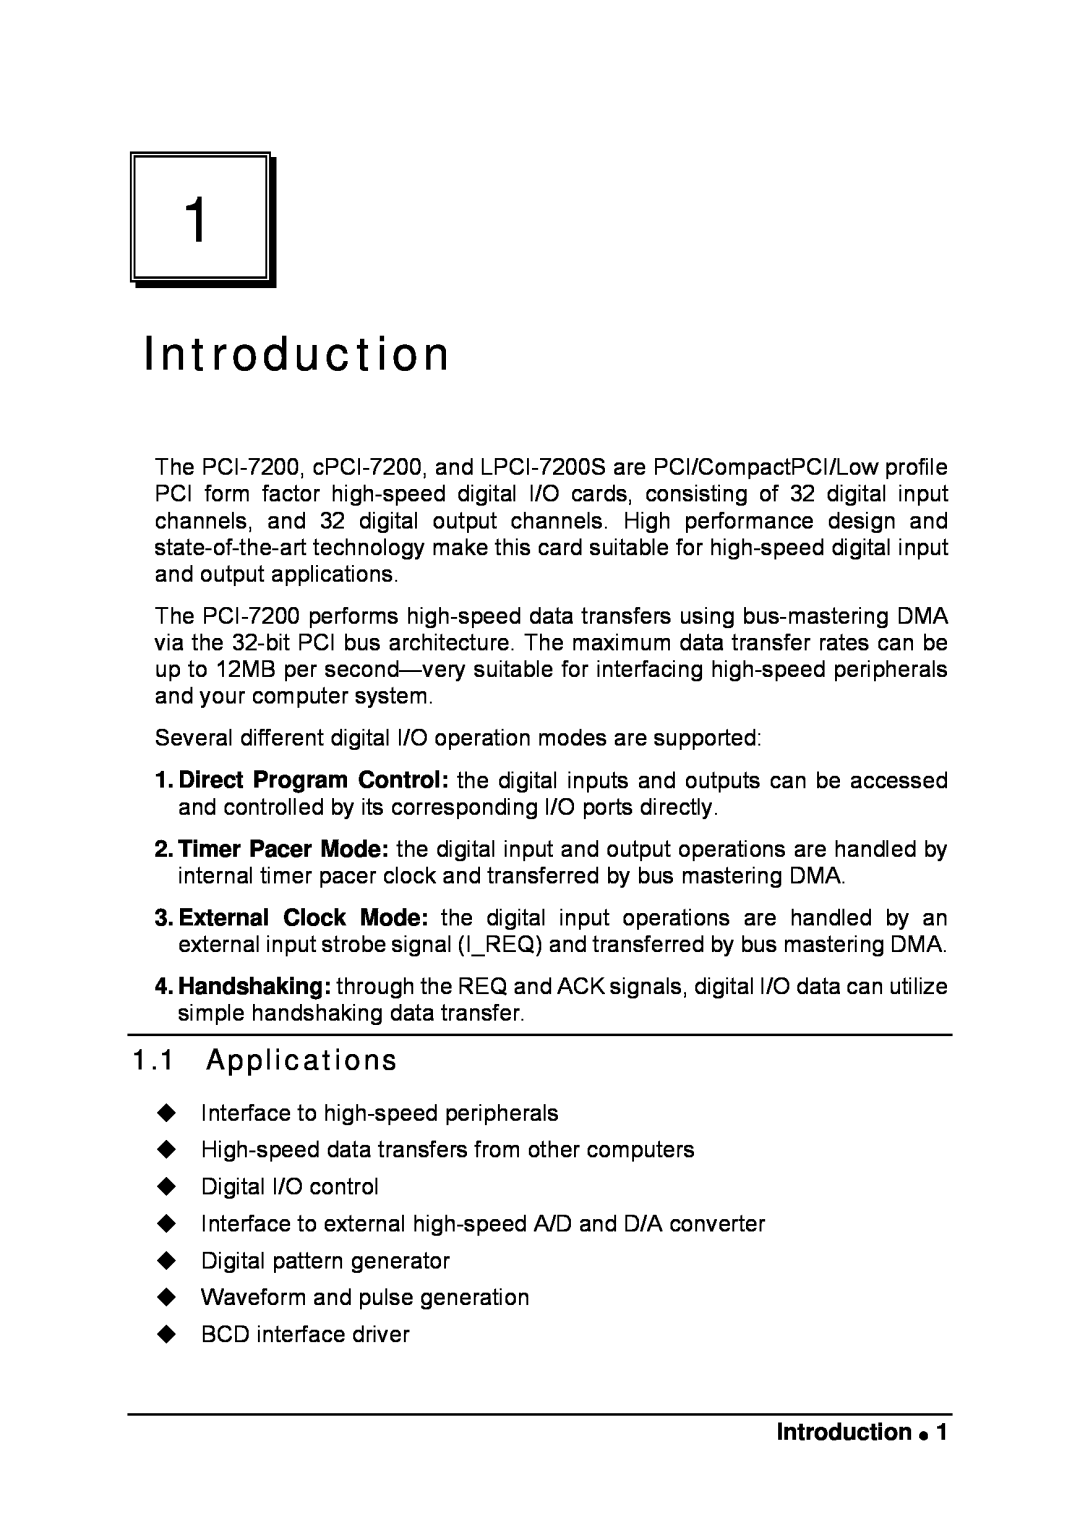 Intel LPCI-7200S manual Introduction, Applications 